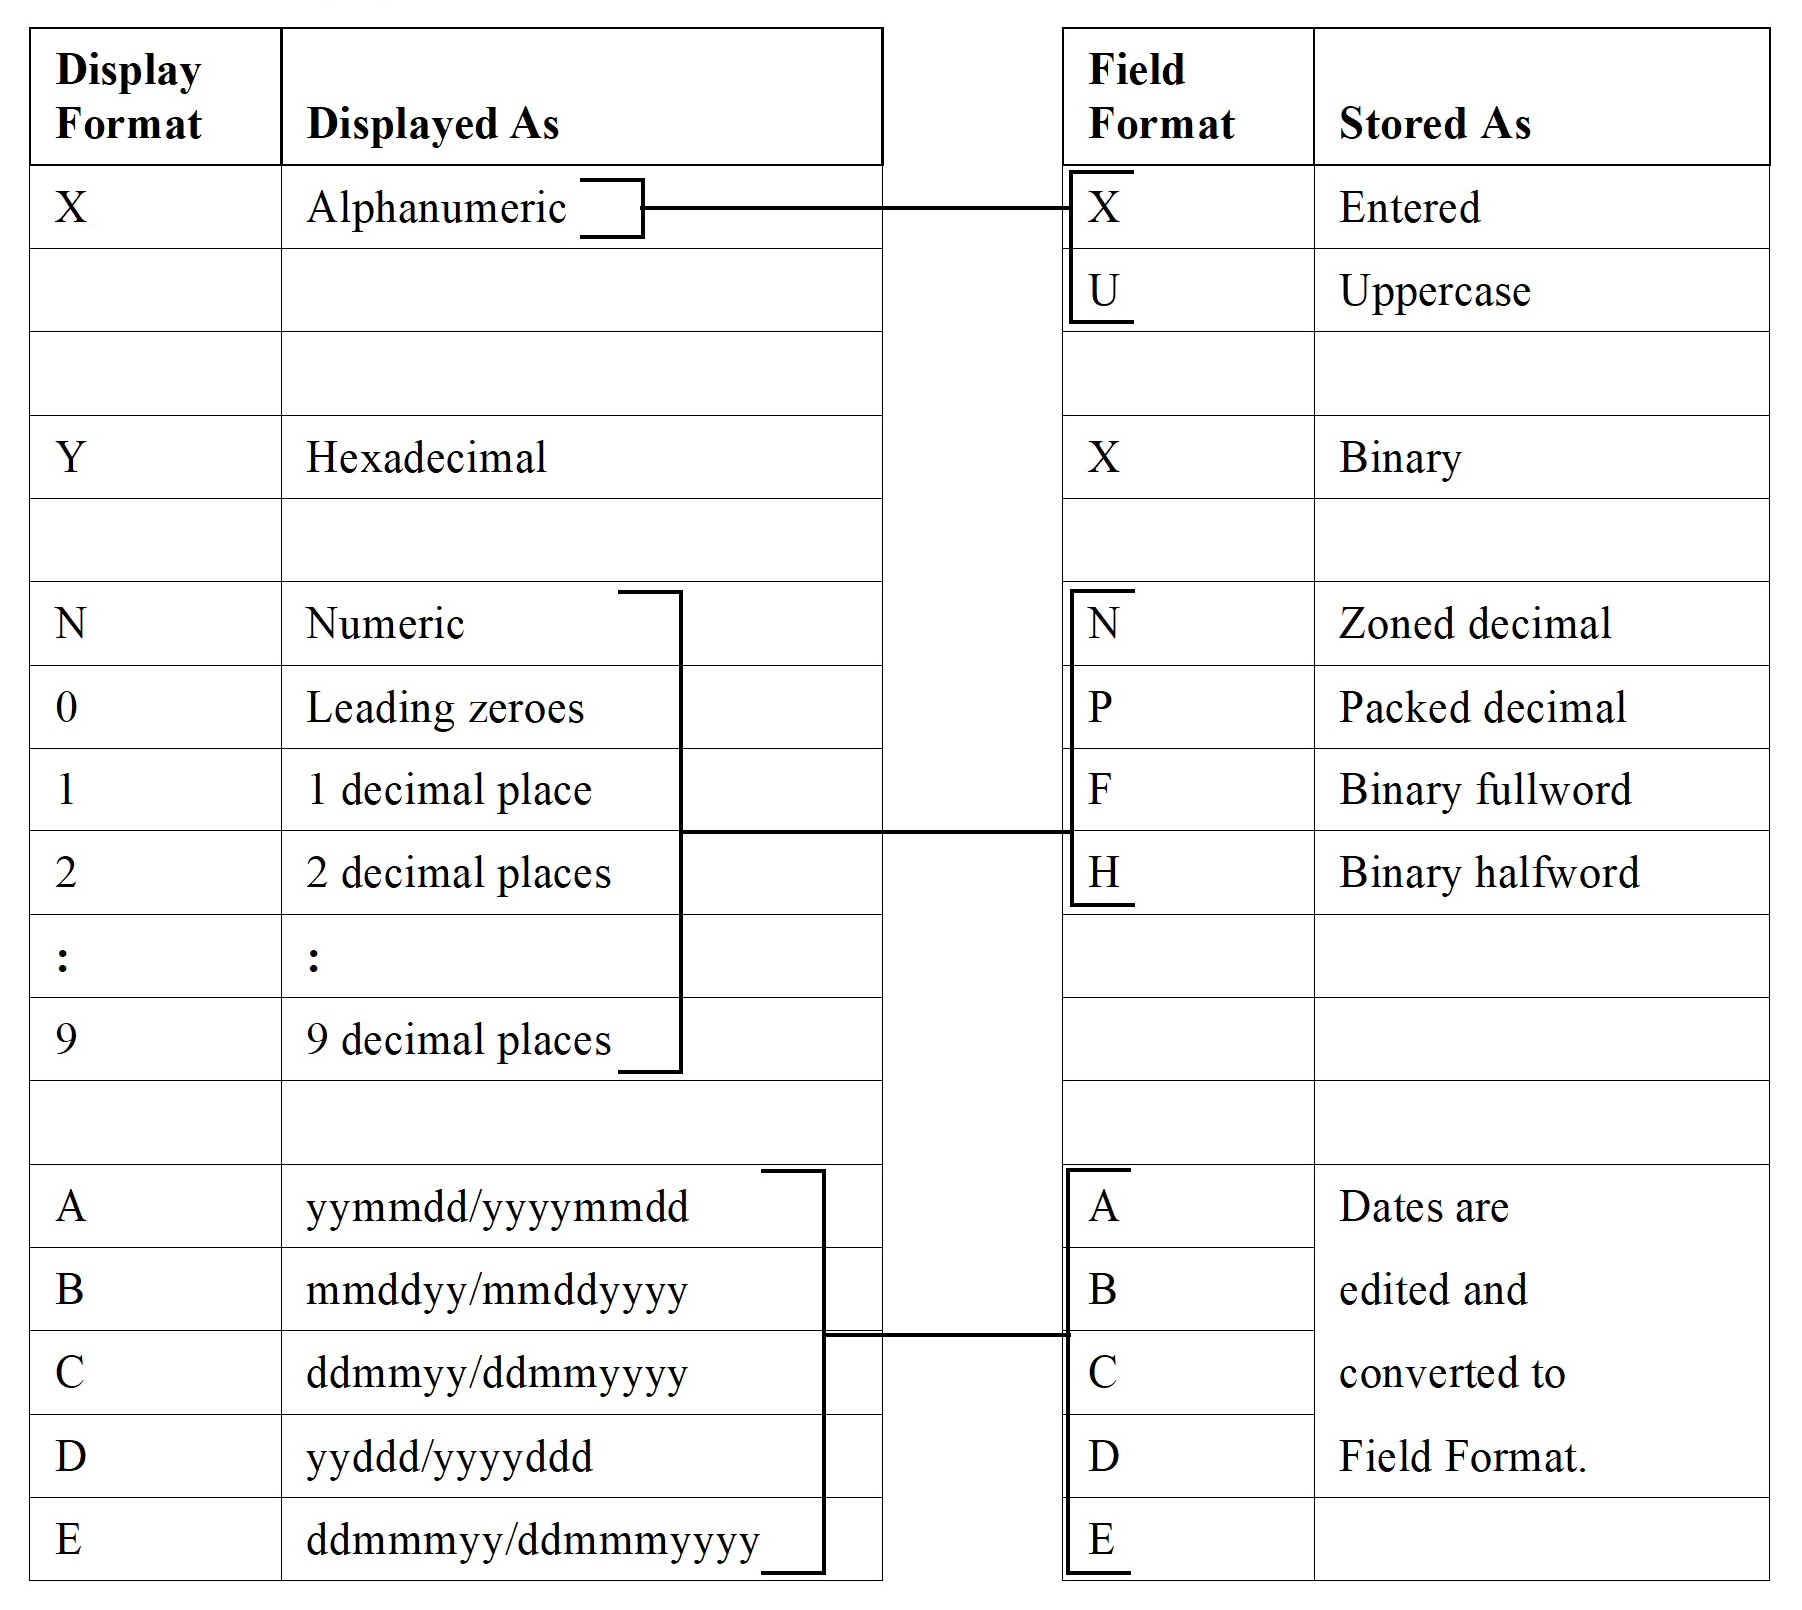 Display/Field Format Combinations